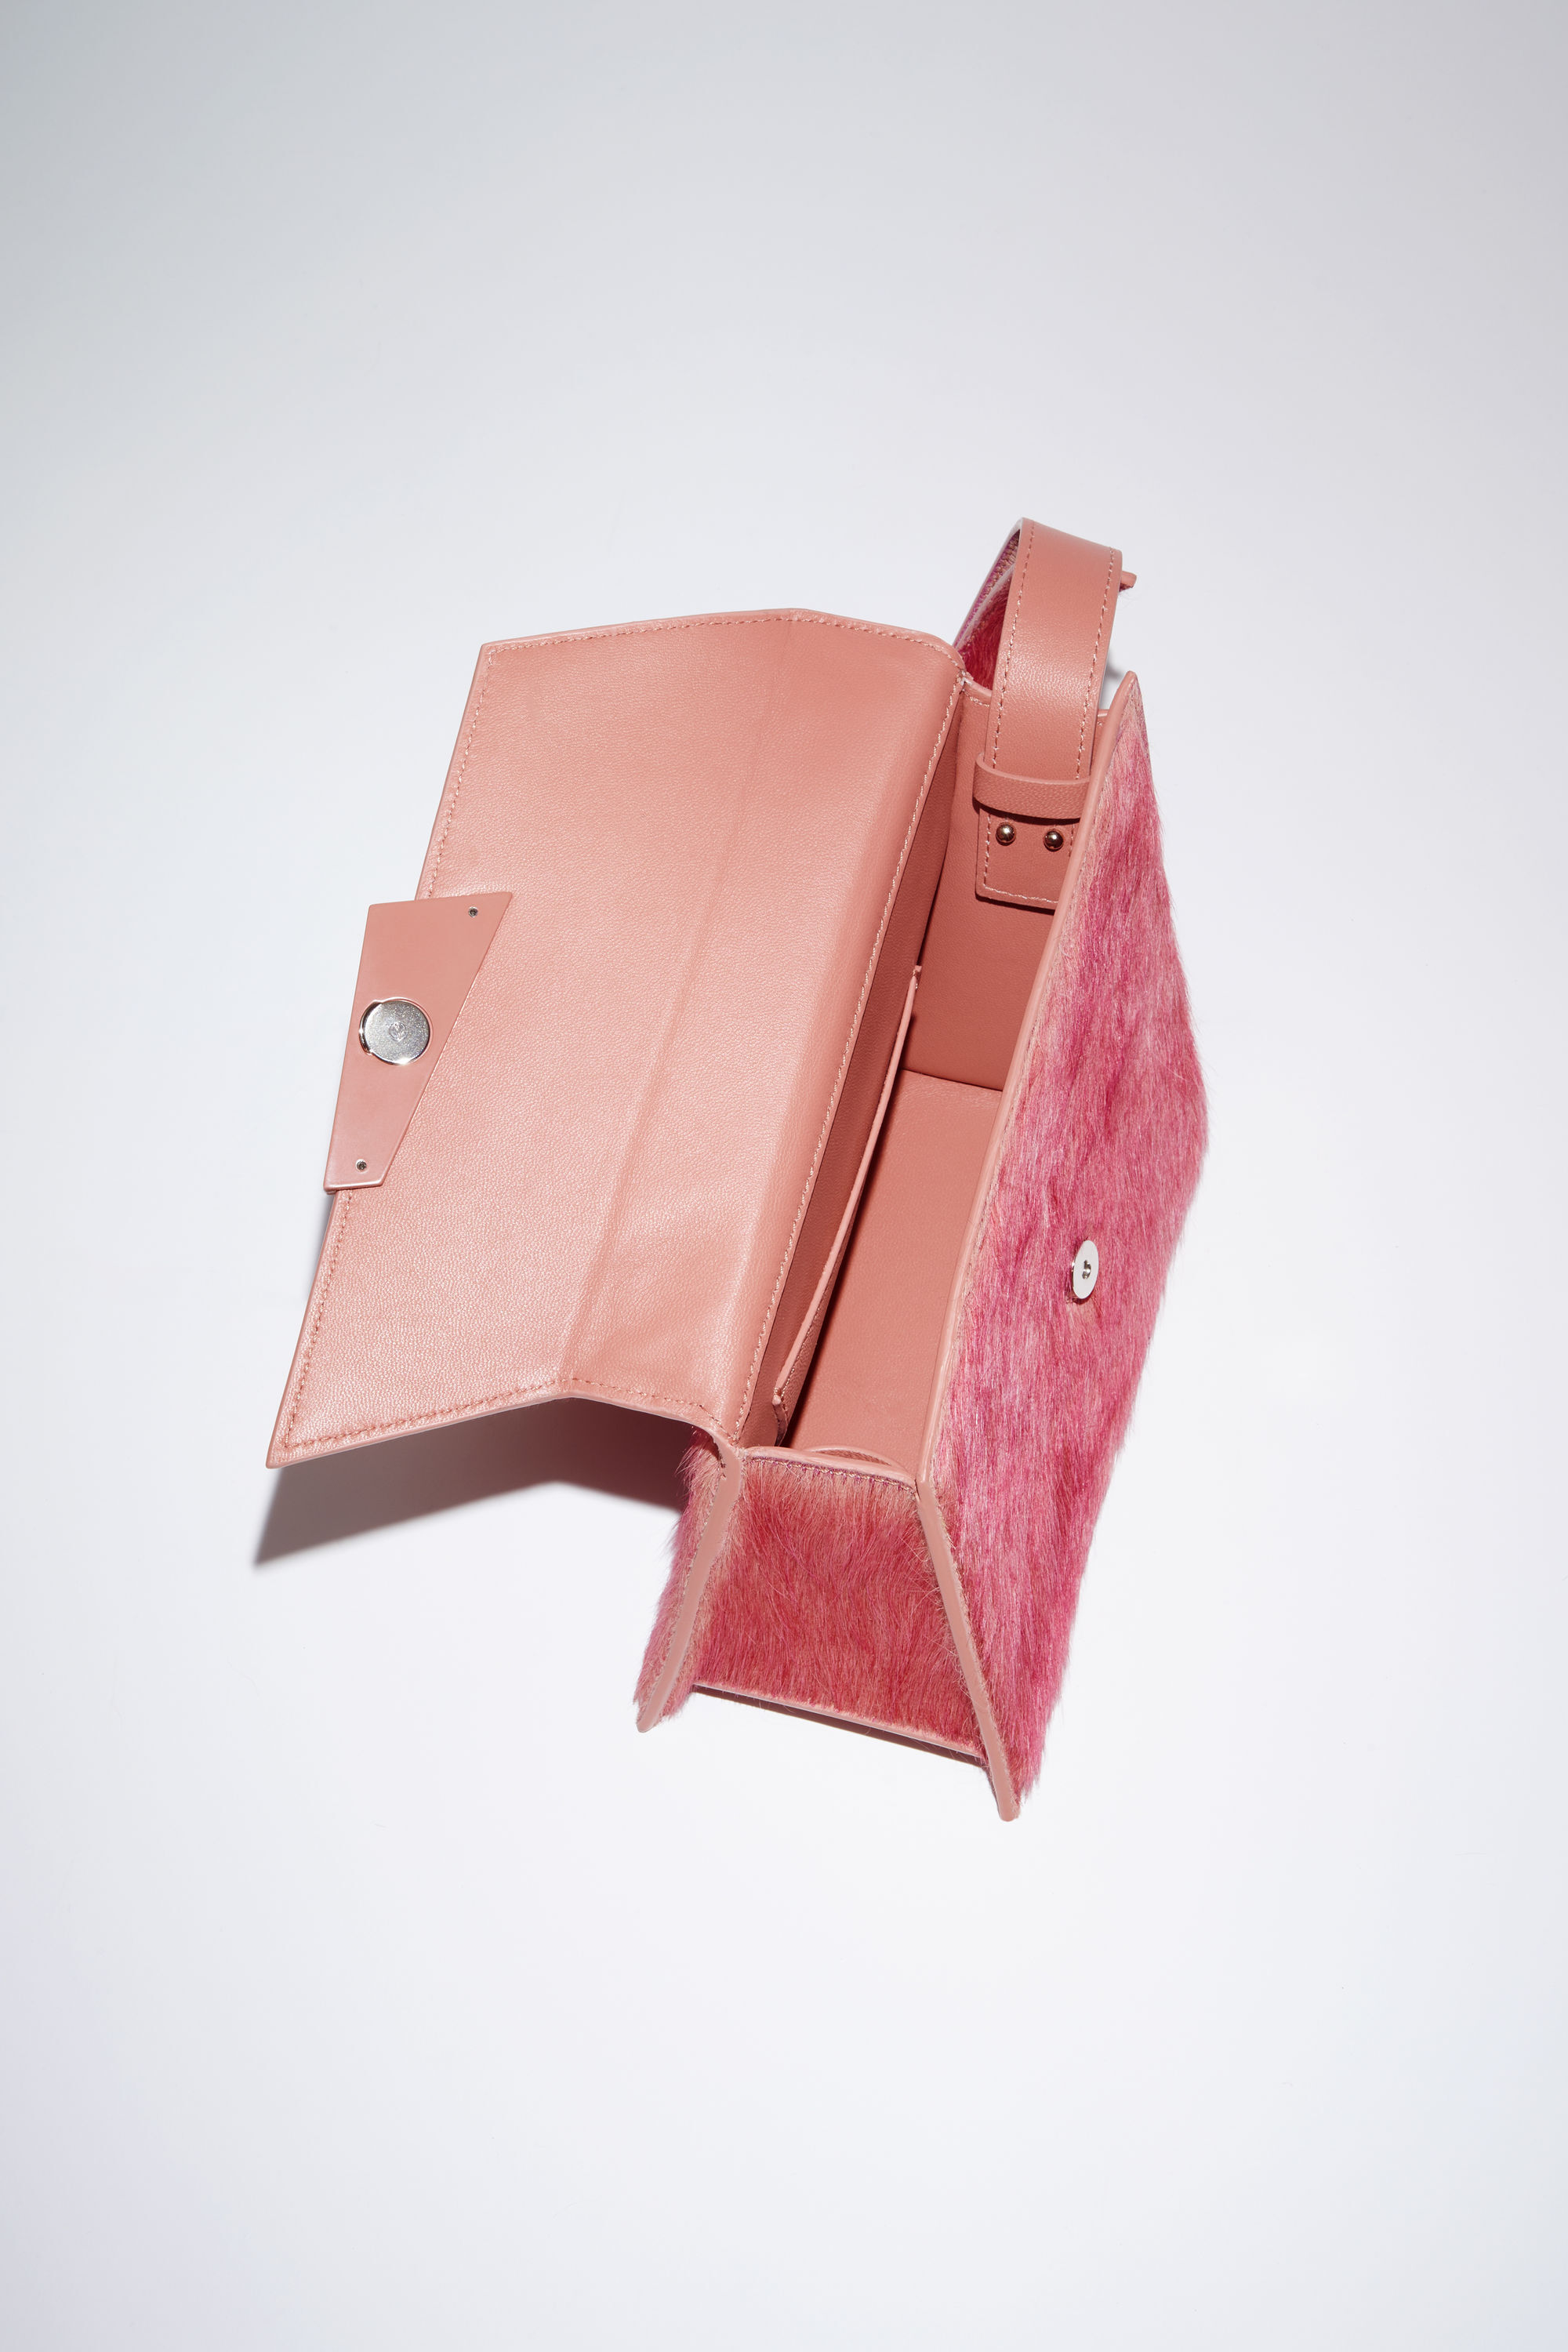 Acne Studios Distortion Bag in Pink Womens Top-handle bags Acne Studios Top-handle bags 